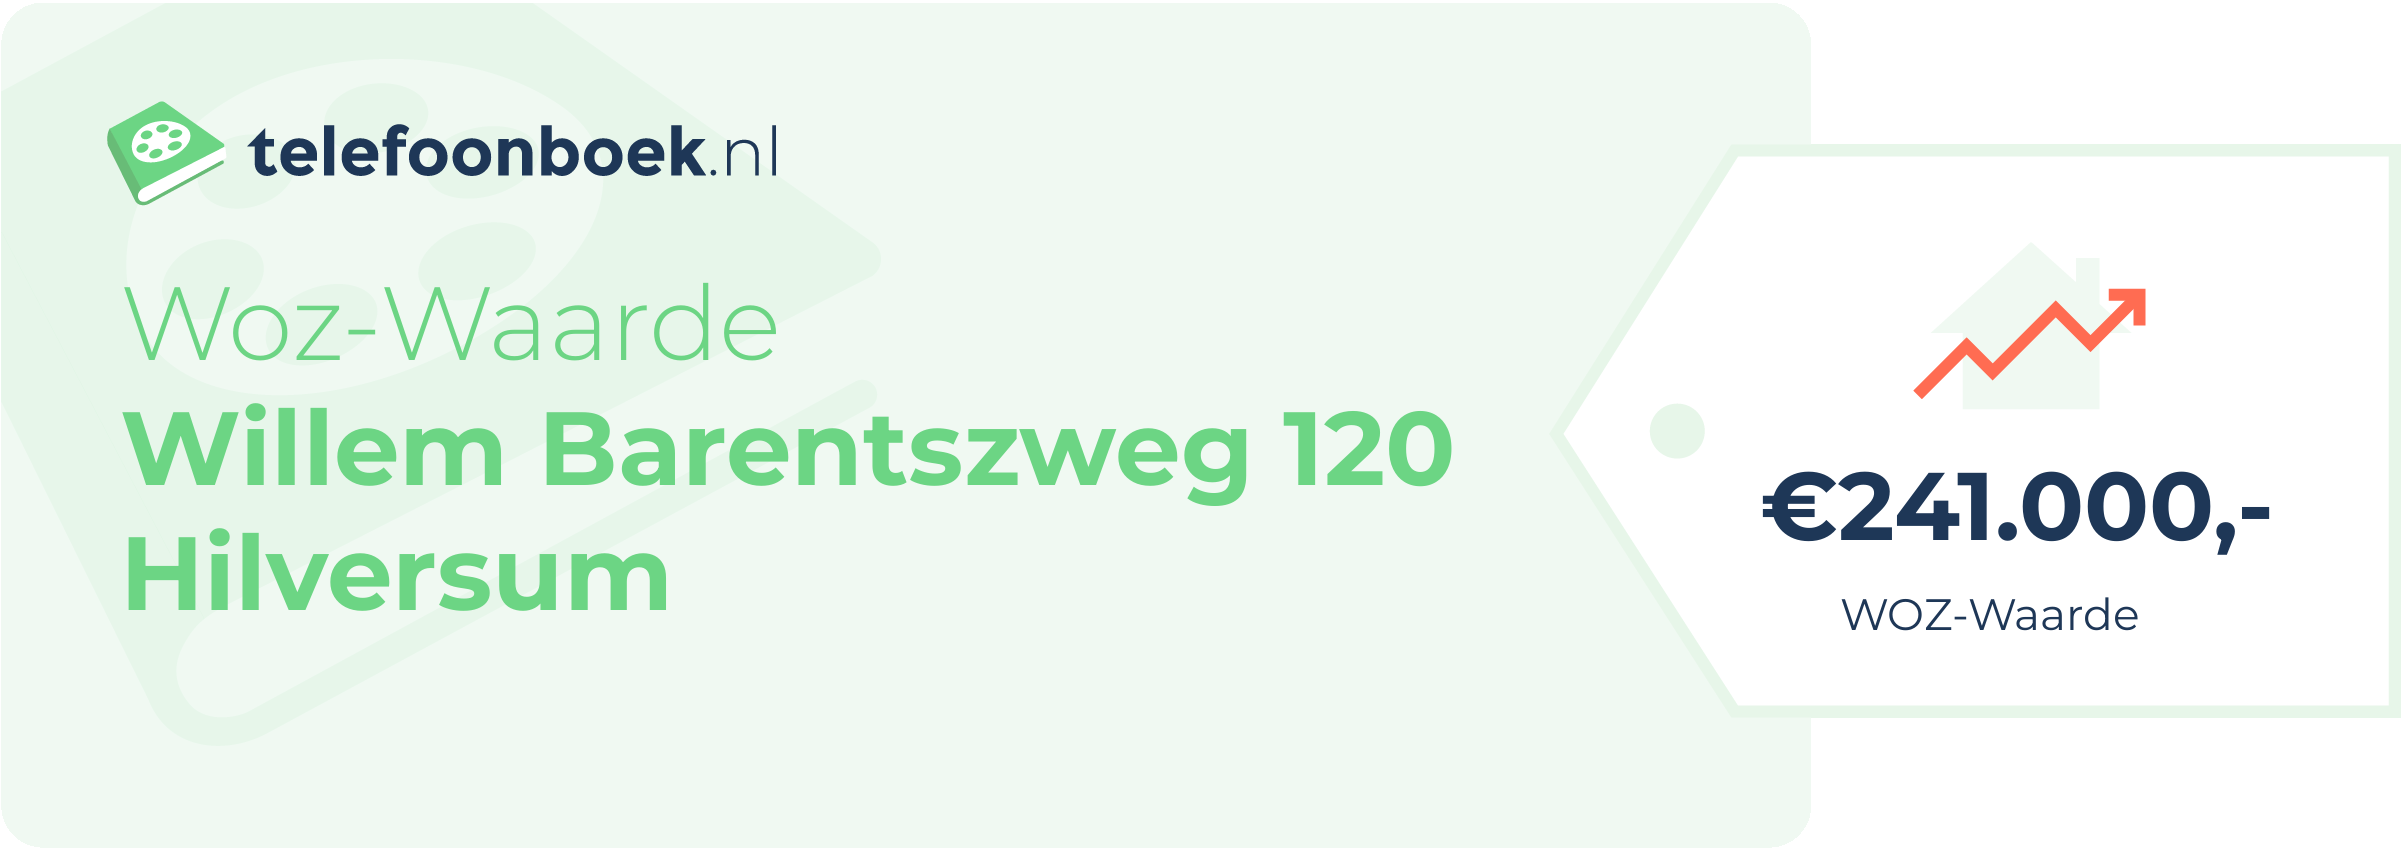 WOZ-waarde Willem Barentszweg 120 Hilversum